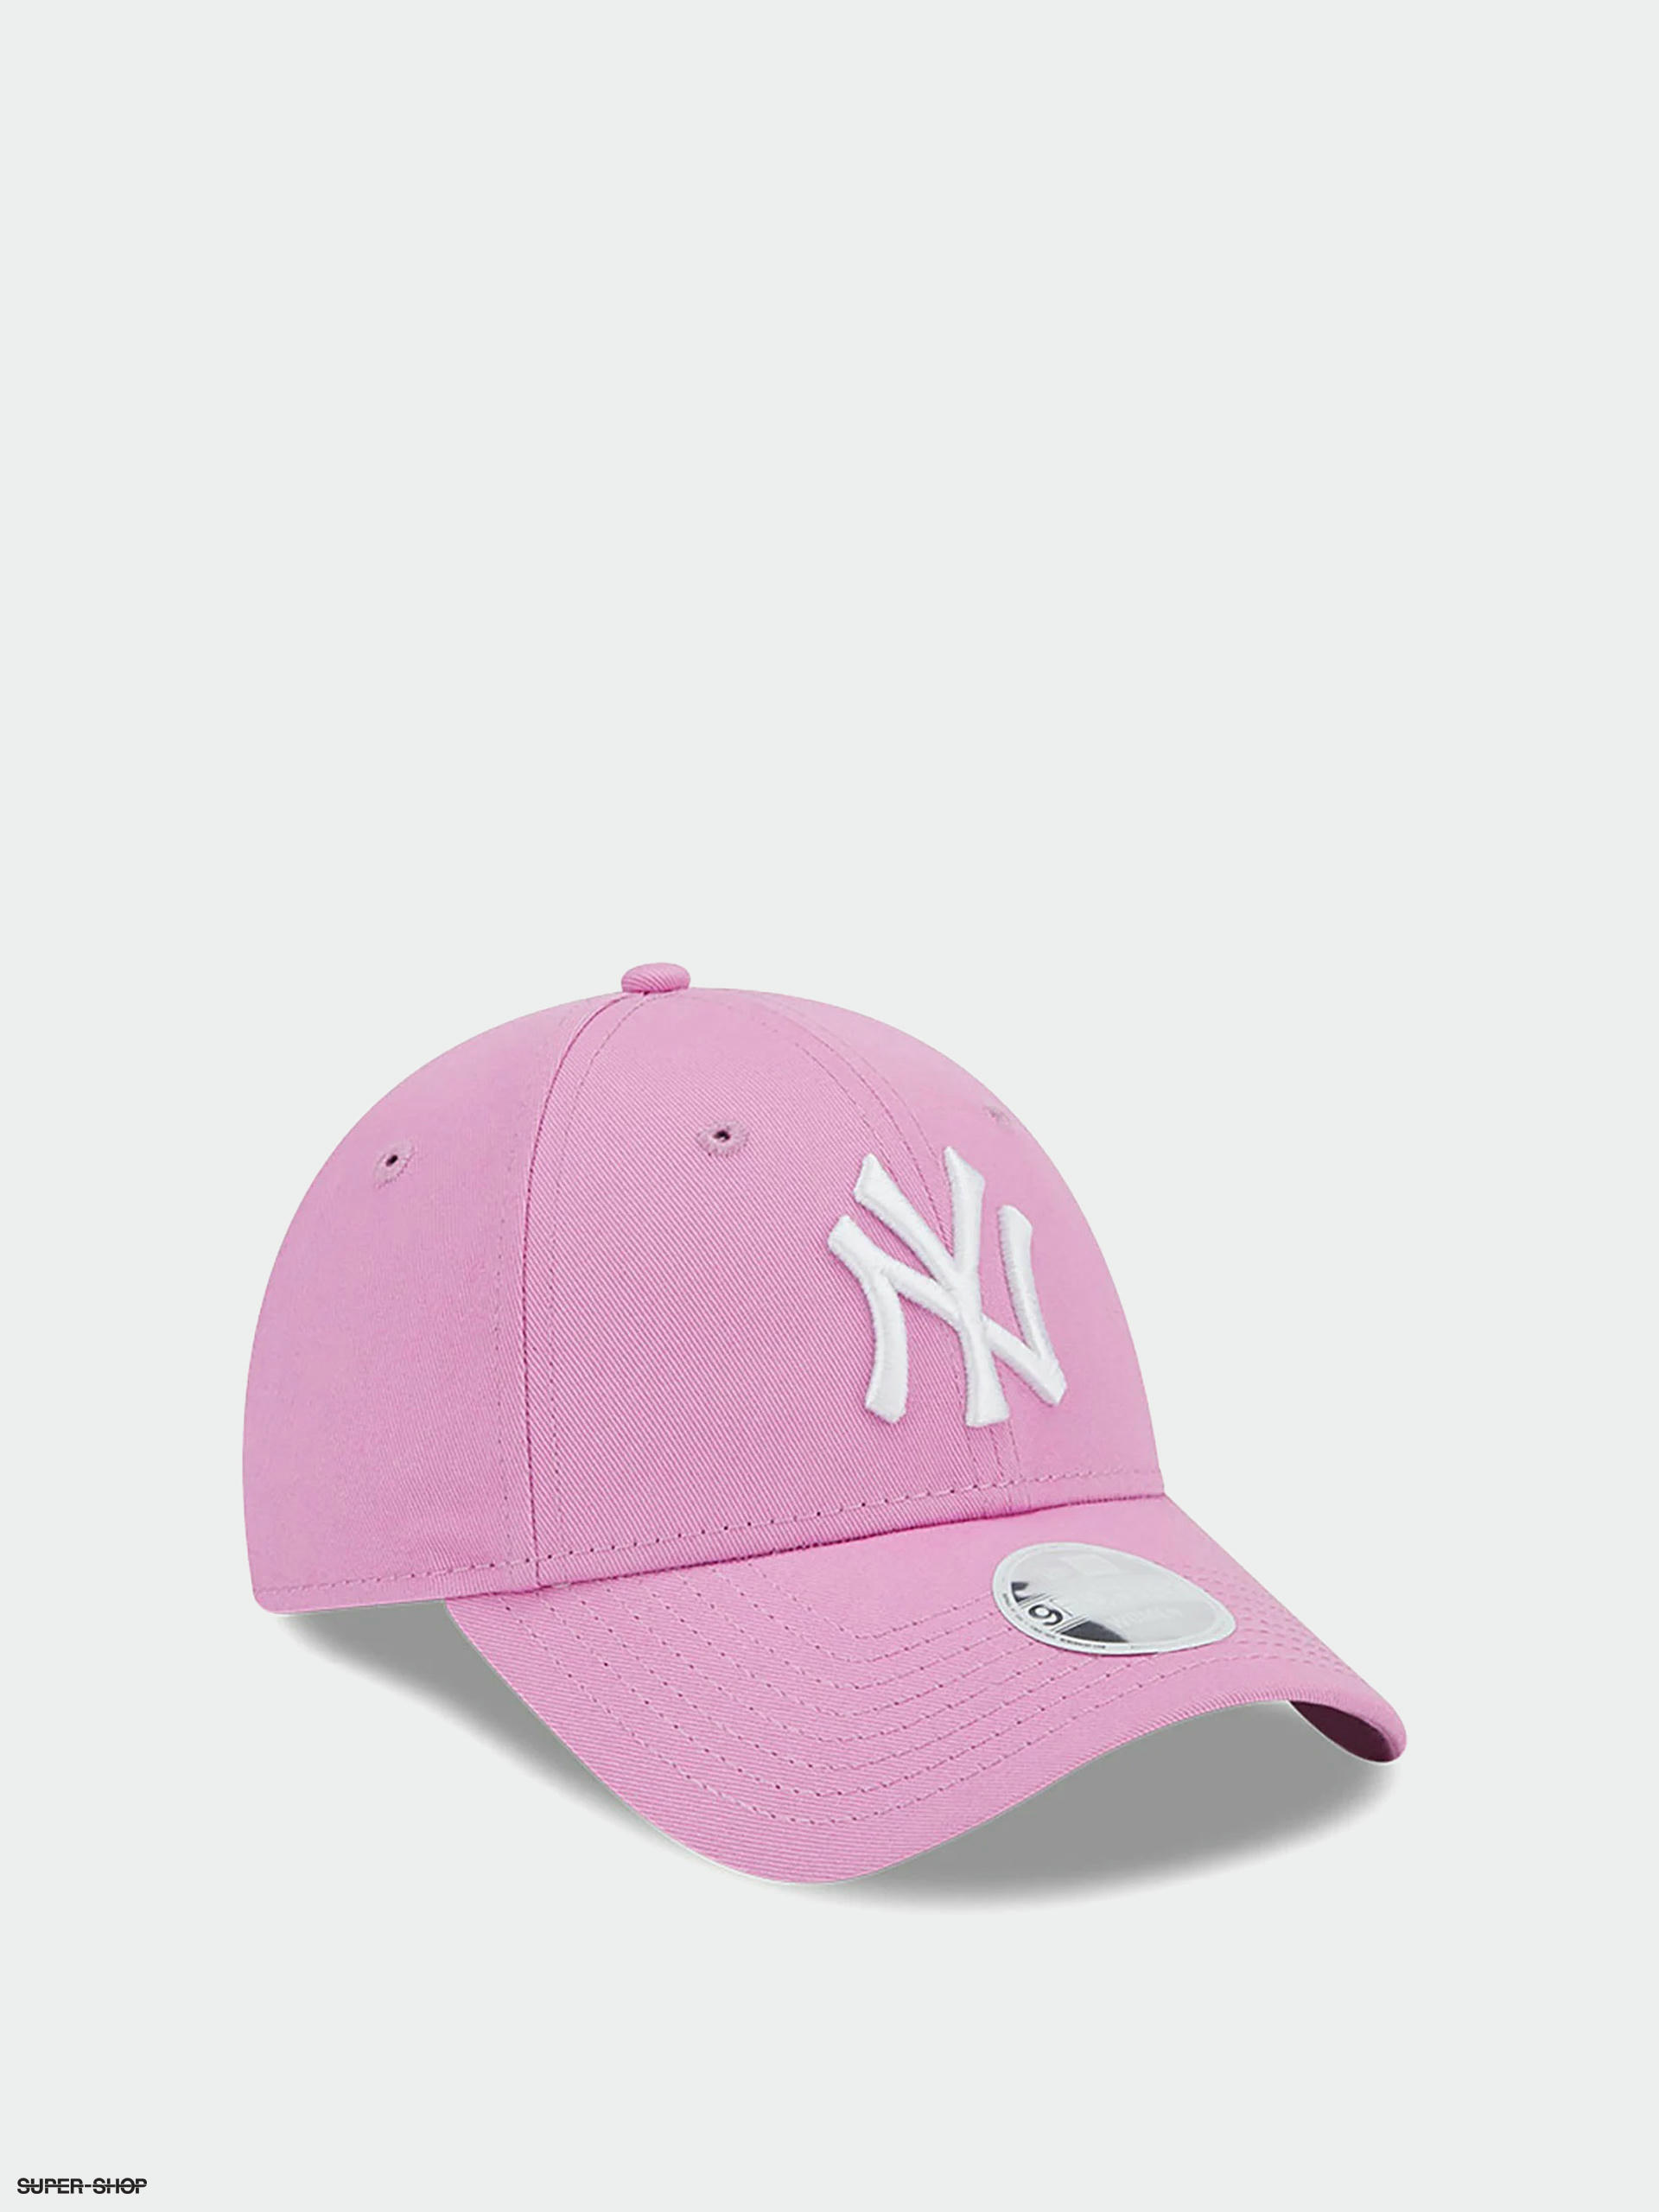 New Era New York Yankees League Essential 9Forty Adjustable Cap